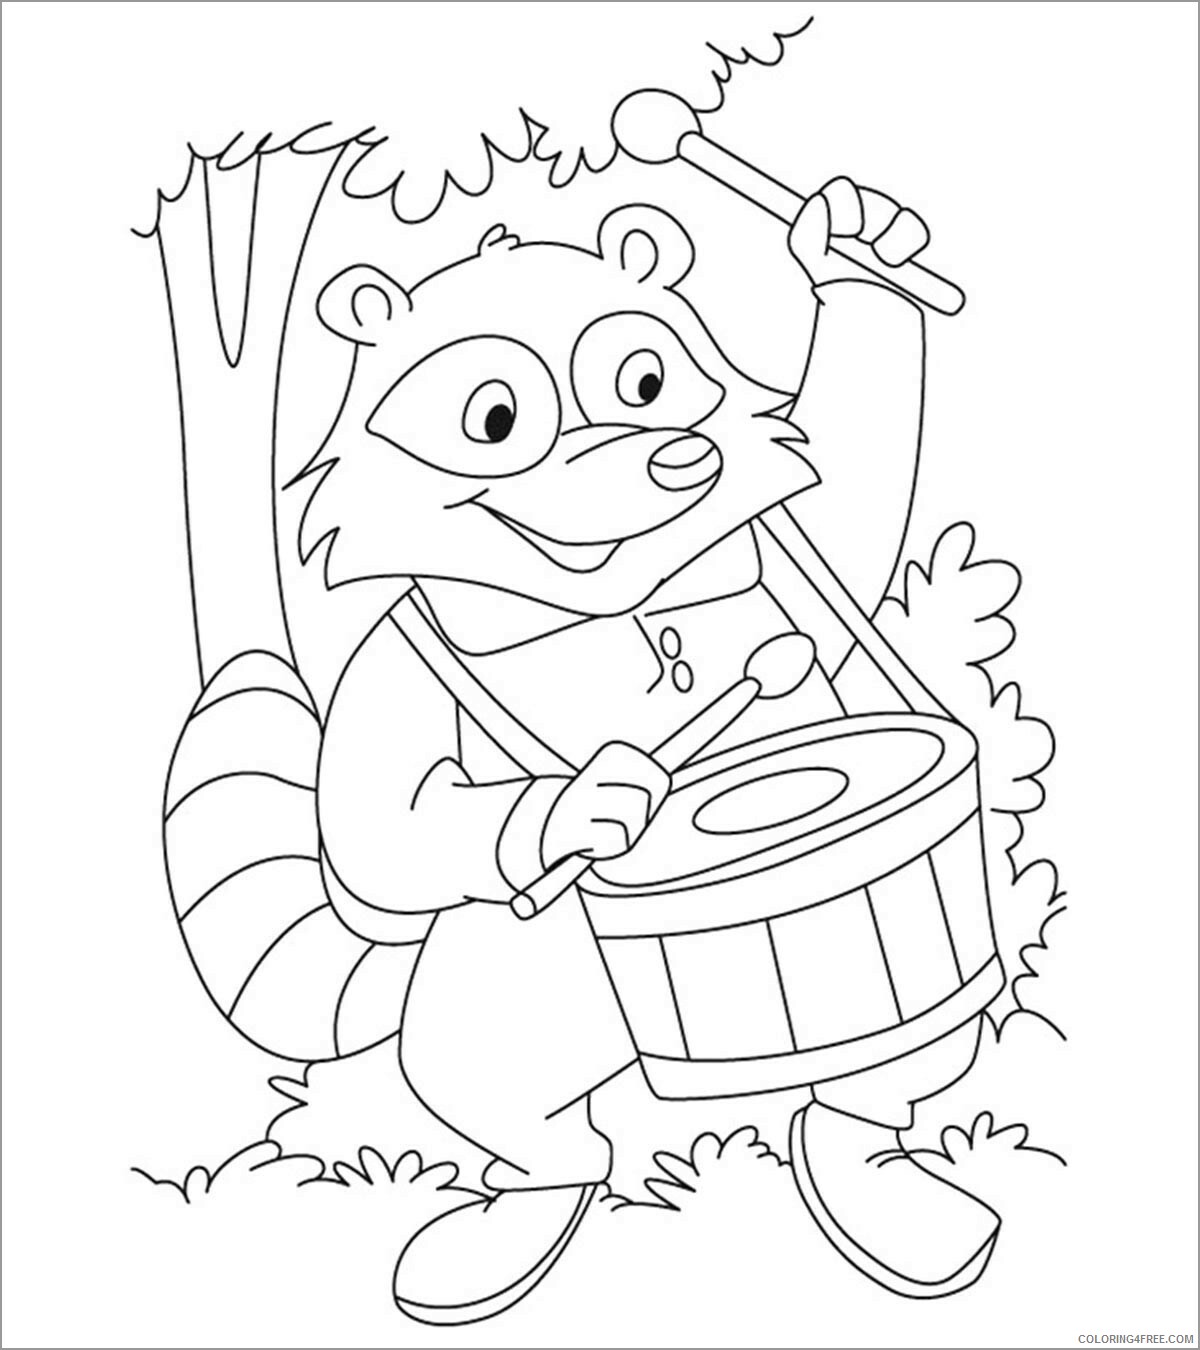 Raccoon Coloring Pages Animal Printable Sheets cartoon raccoon 2021 4196 Coloring4free